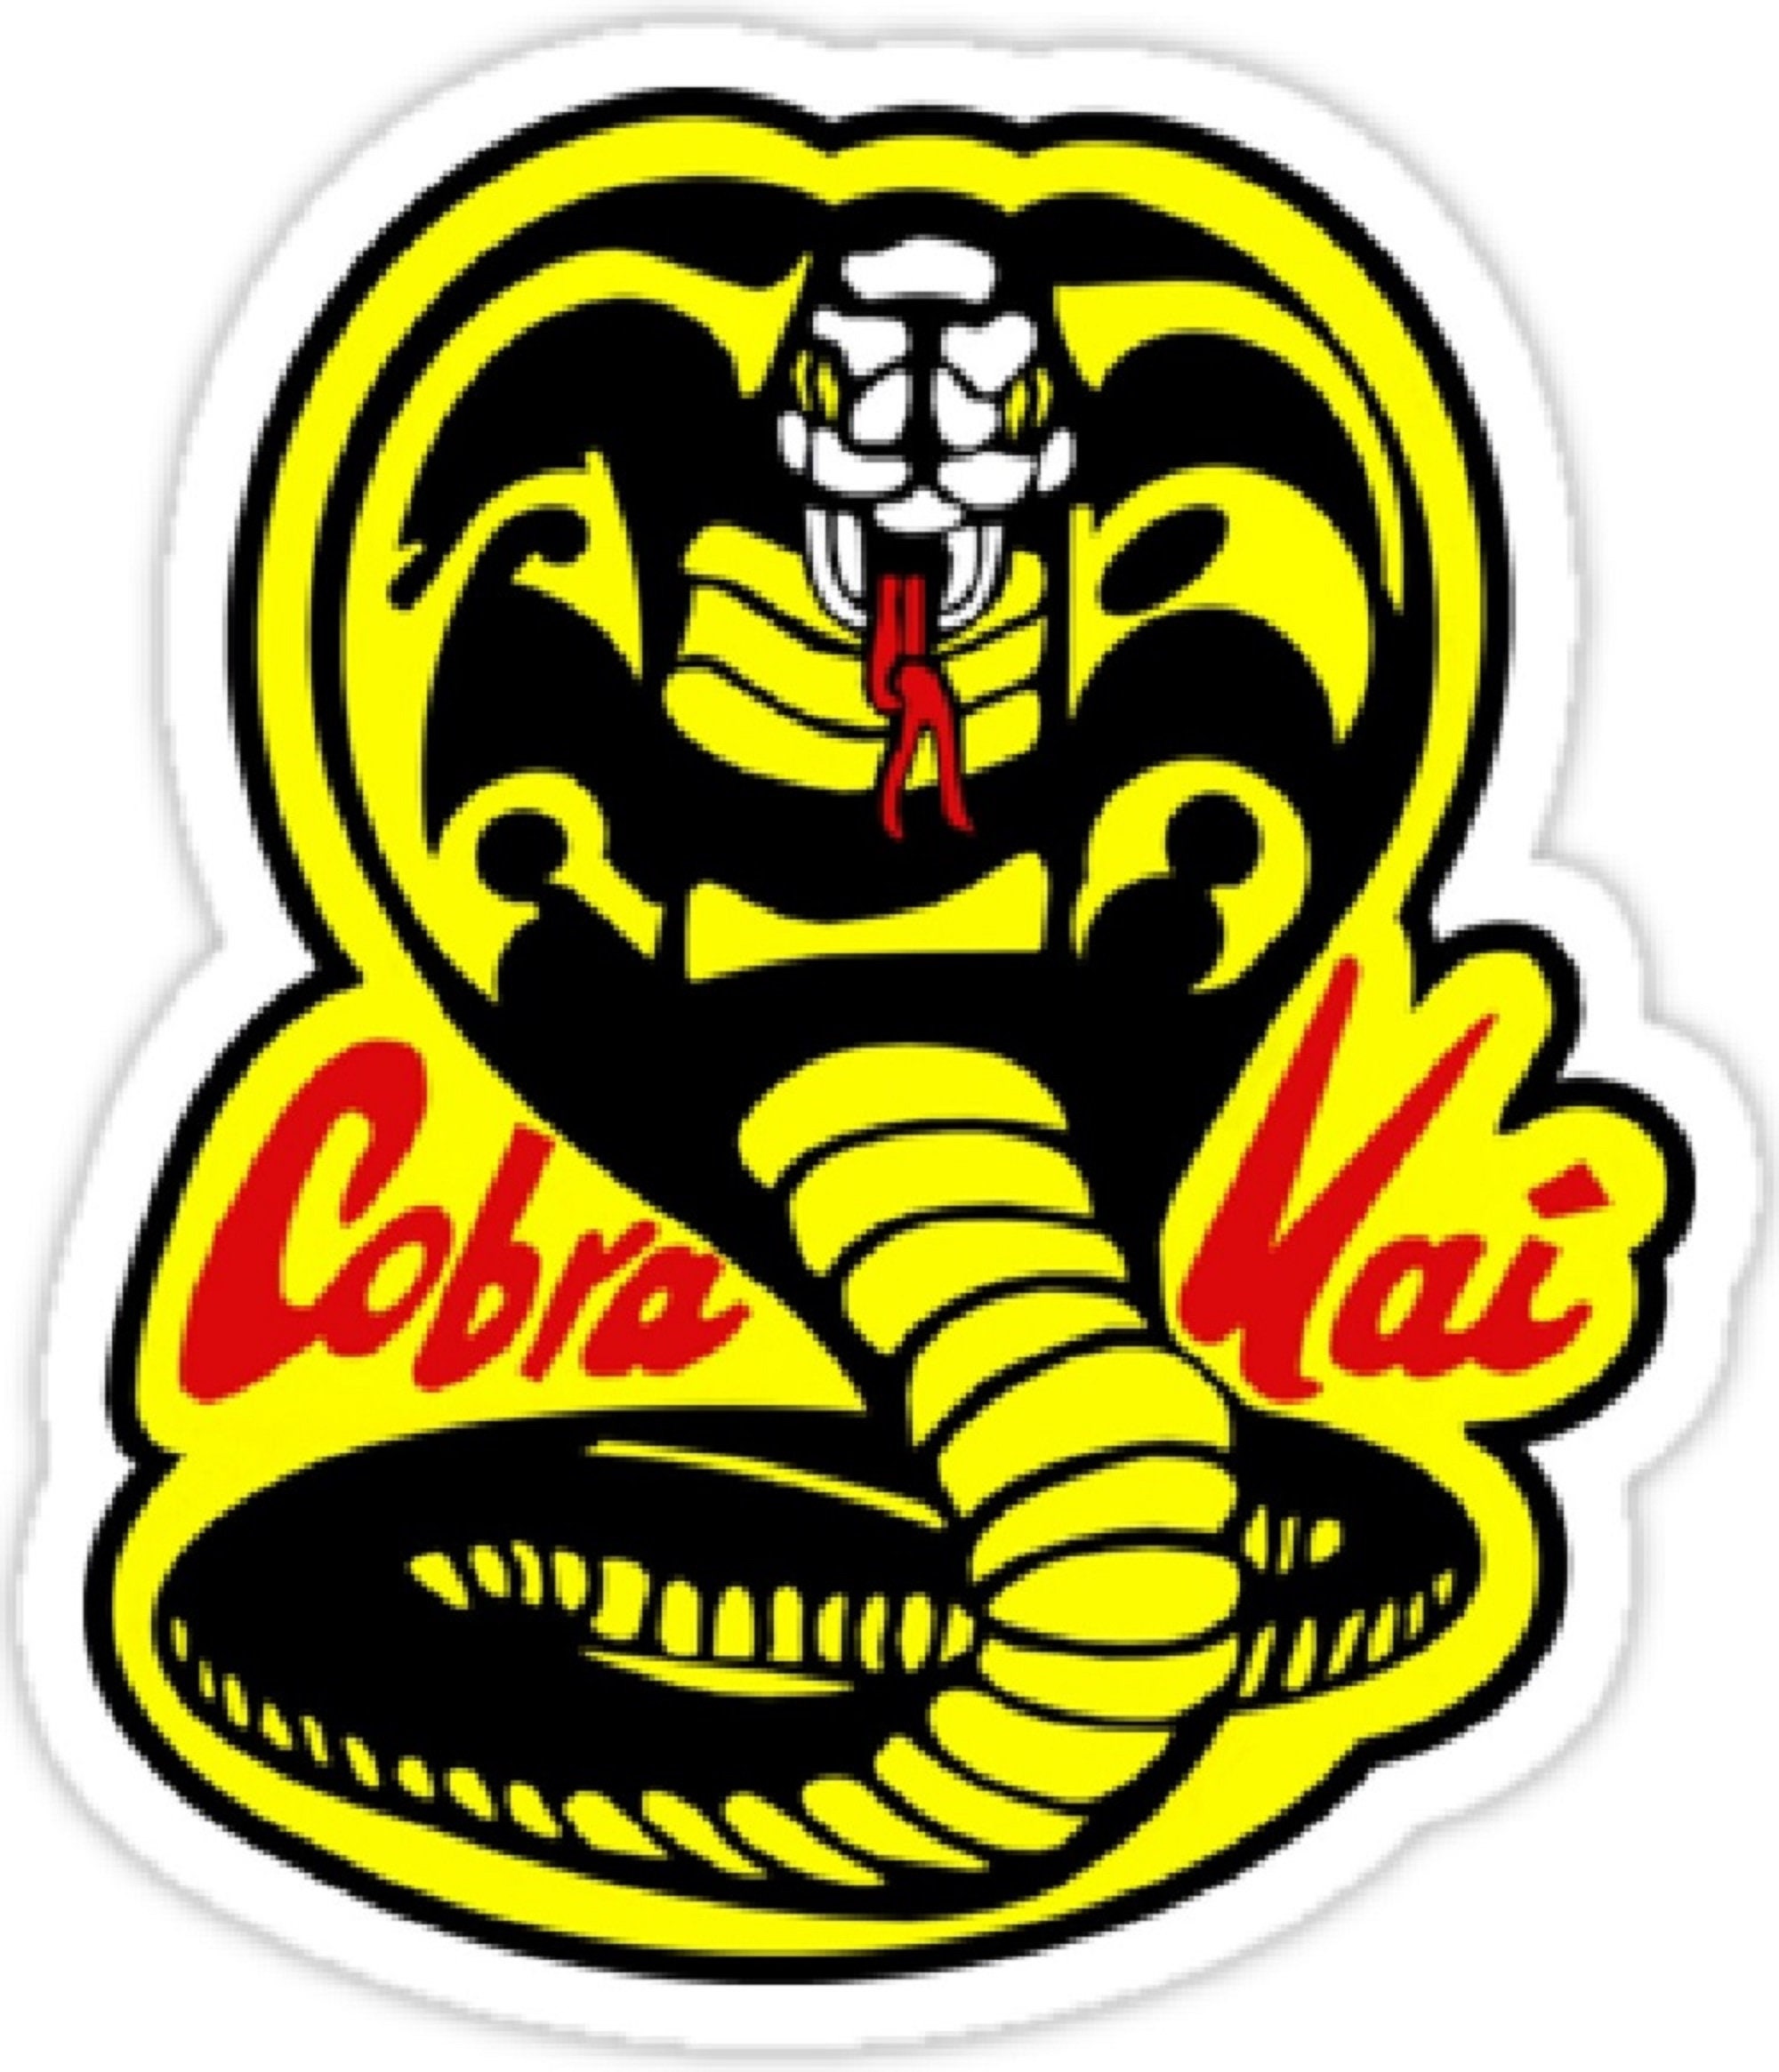 Cobra Kai Logo Karate Kid Vinyl Sticker 